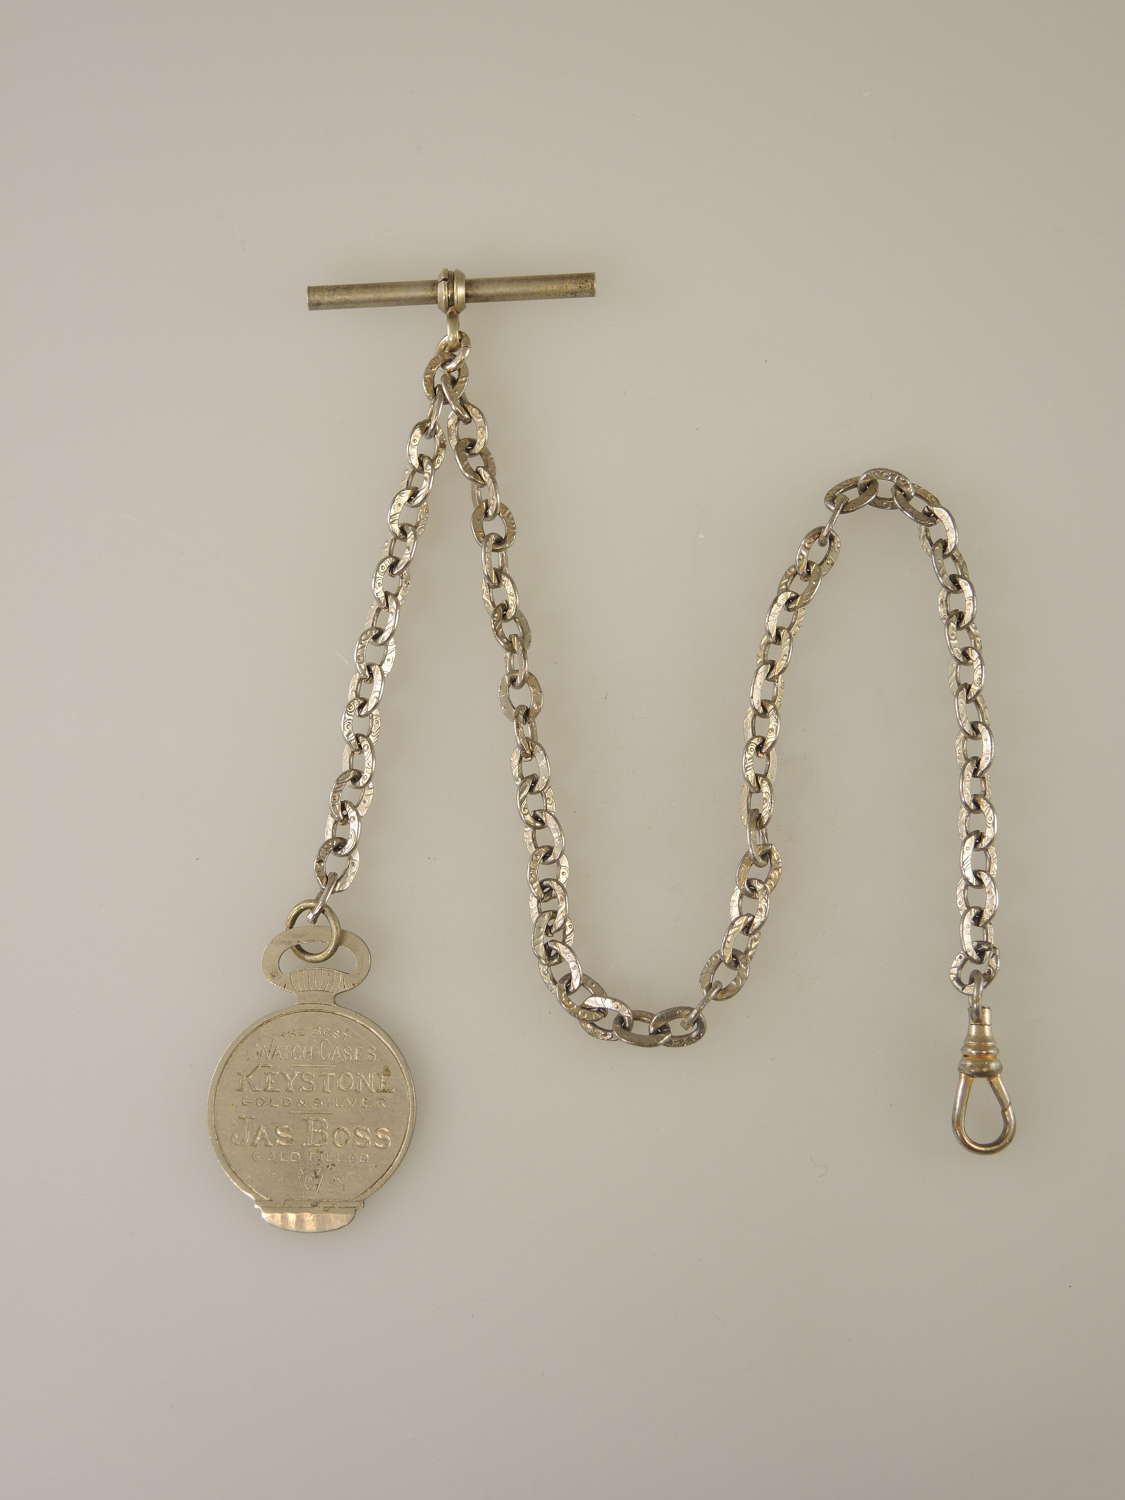 White metal pocket watch chain with Keystone case opener c1880